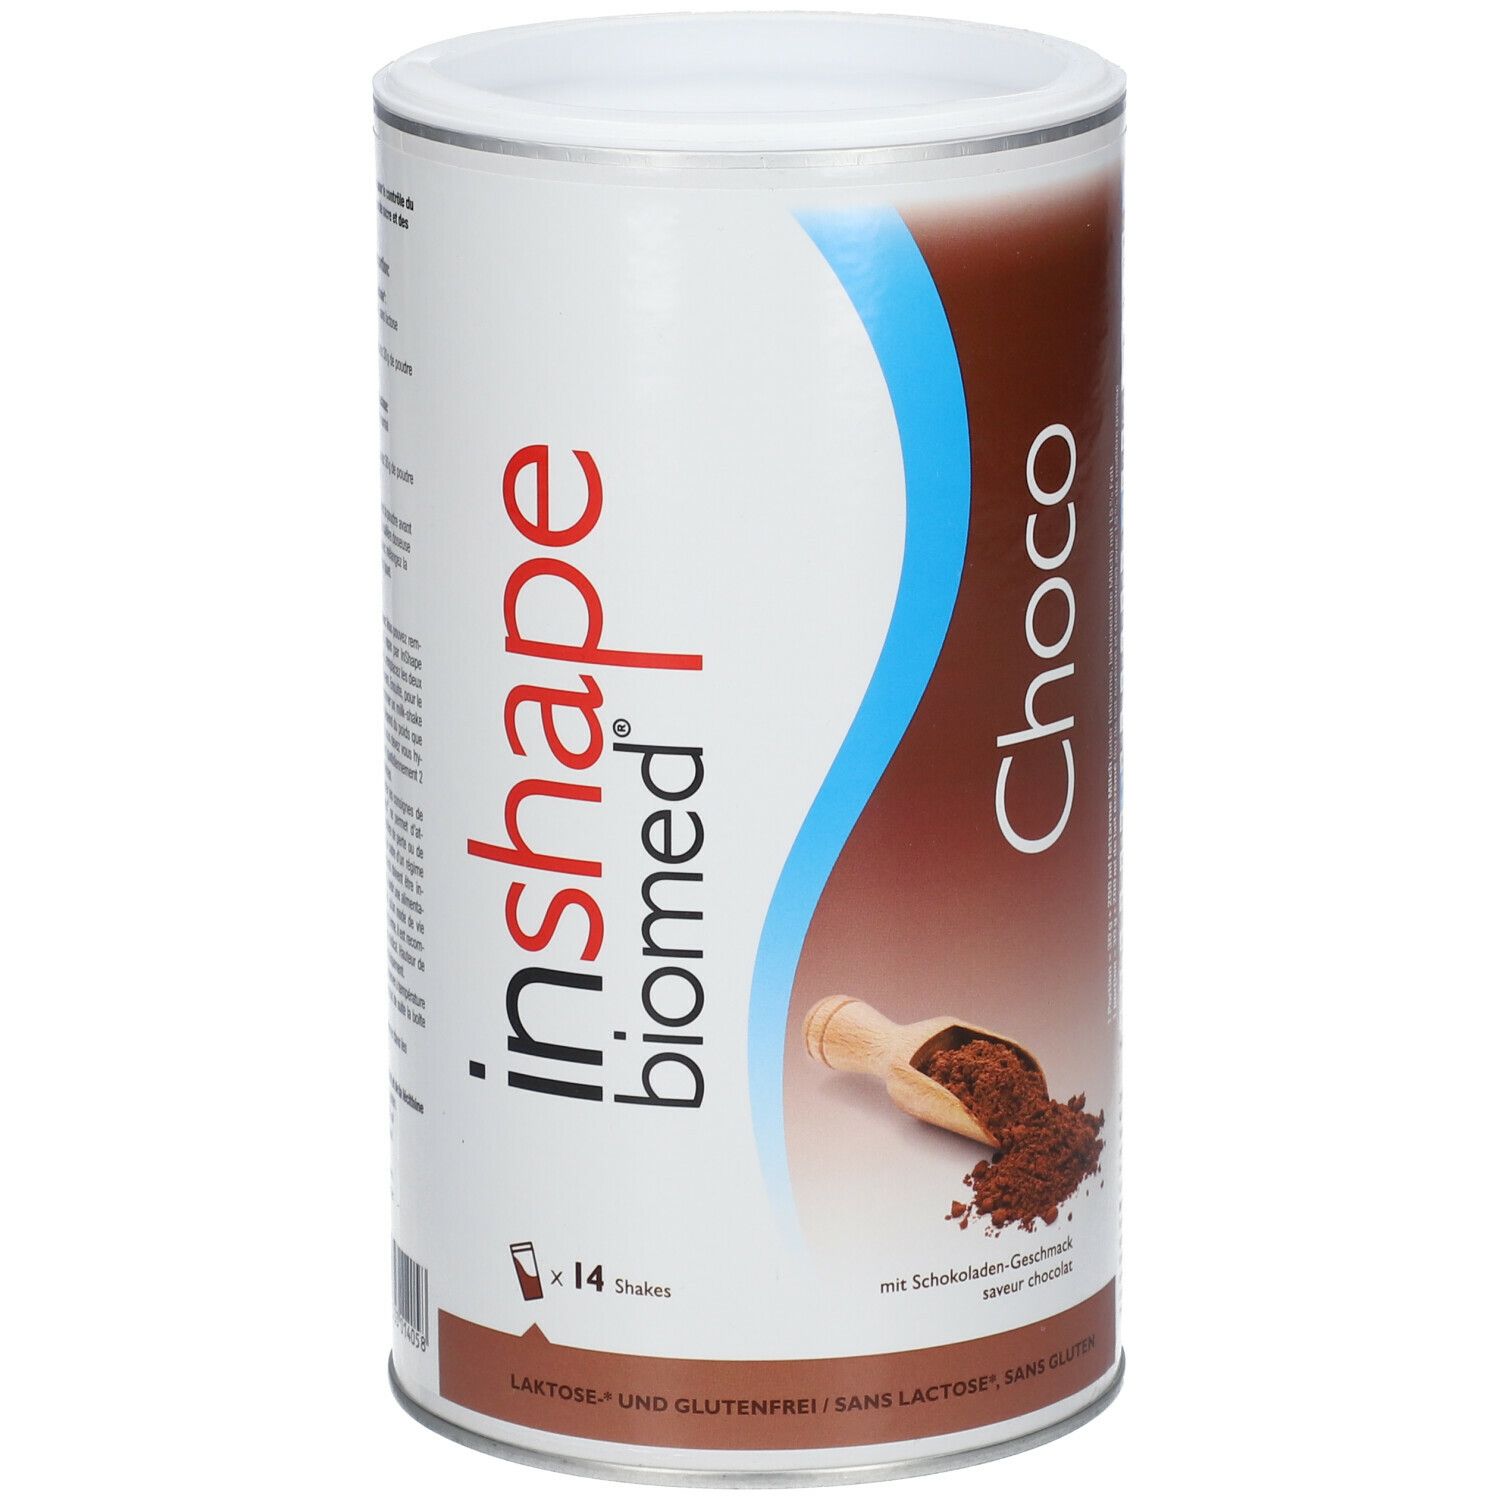 Image of Biomed InShape Shake, Schokolade